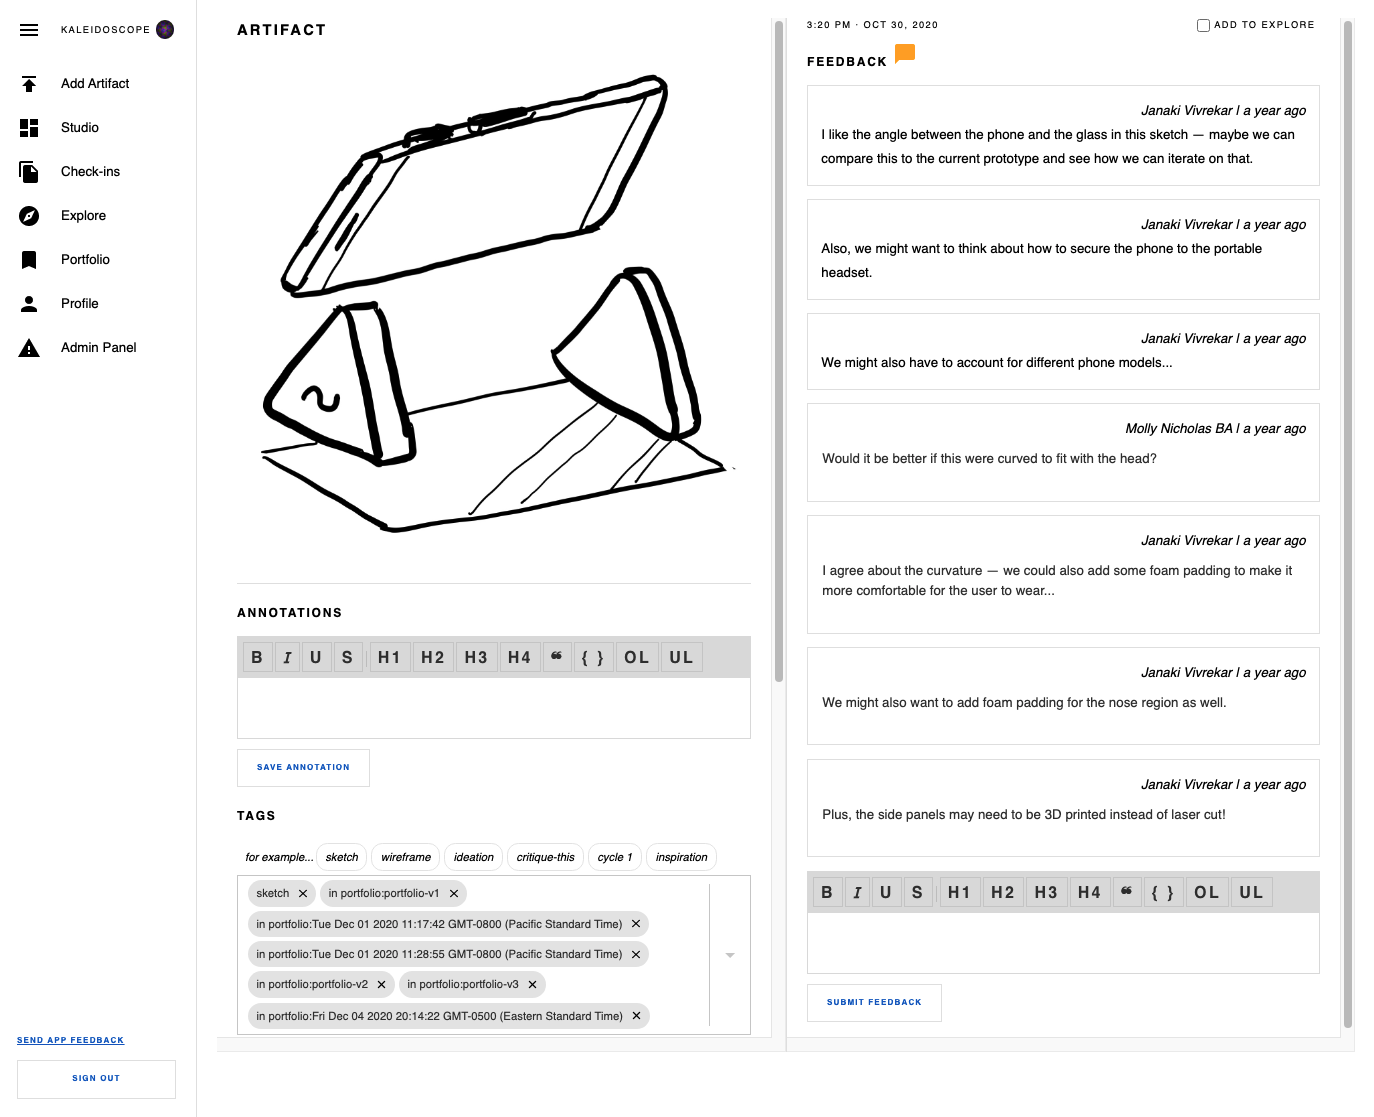 screenshot of feedback interface for a sketch artifact